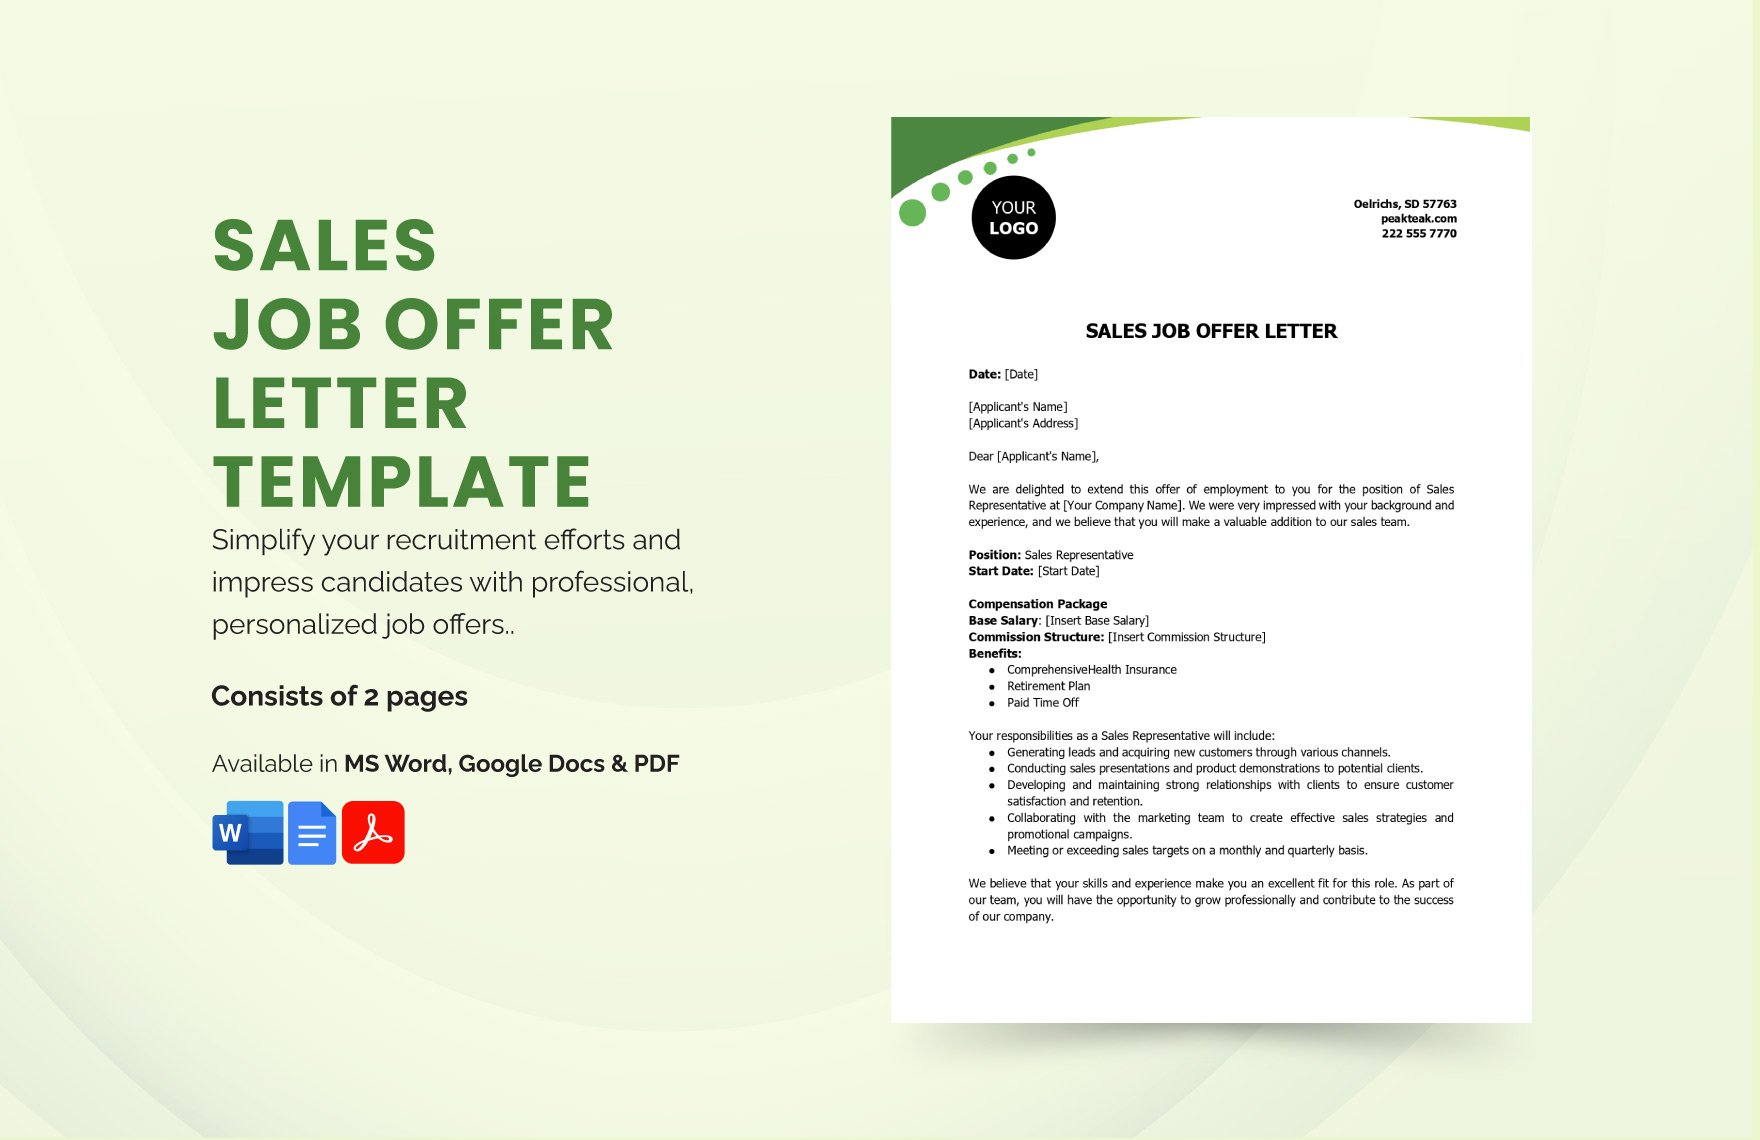 Sales Job Offer Letter Template in Word, Google Docs, PDF